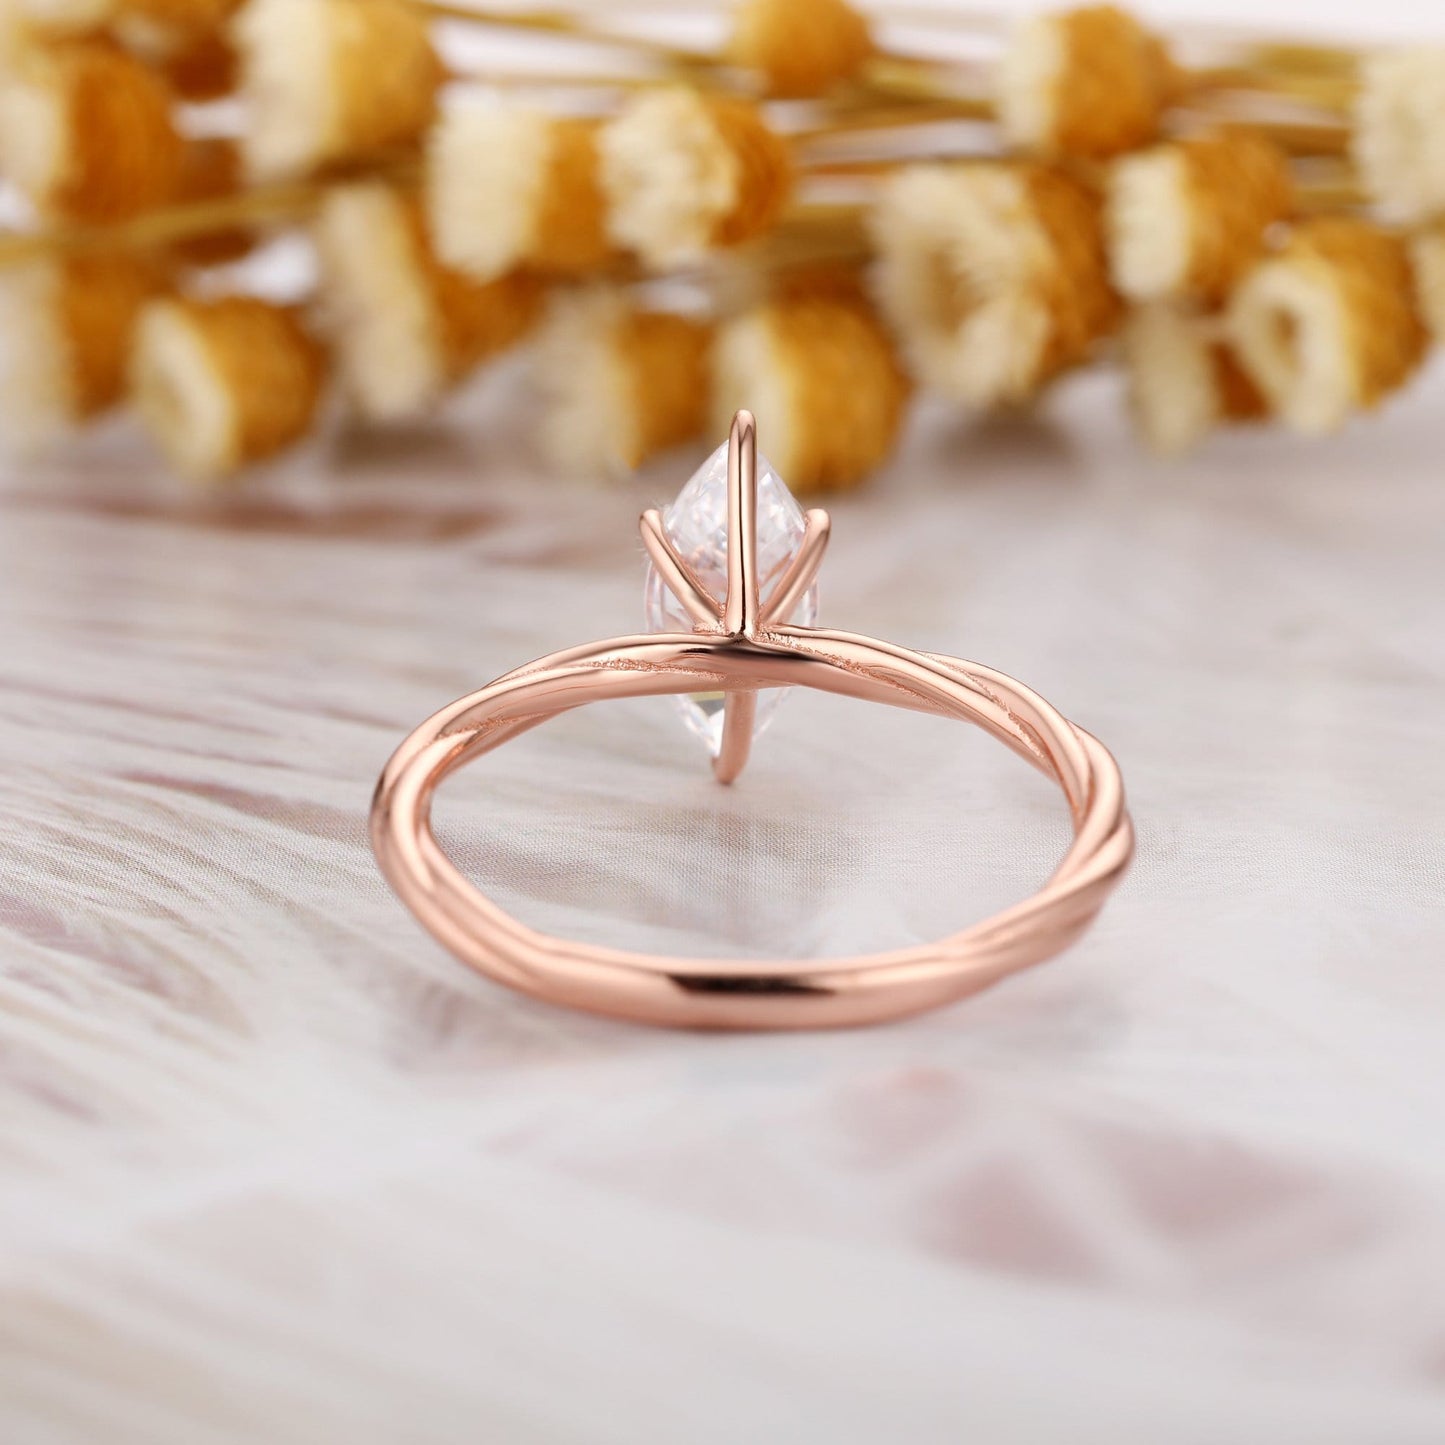 Rope Shank Design Wedding Ring, 1.0CT Marquise Cut Moissanite Ring